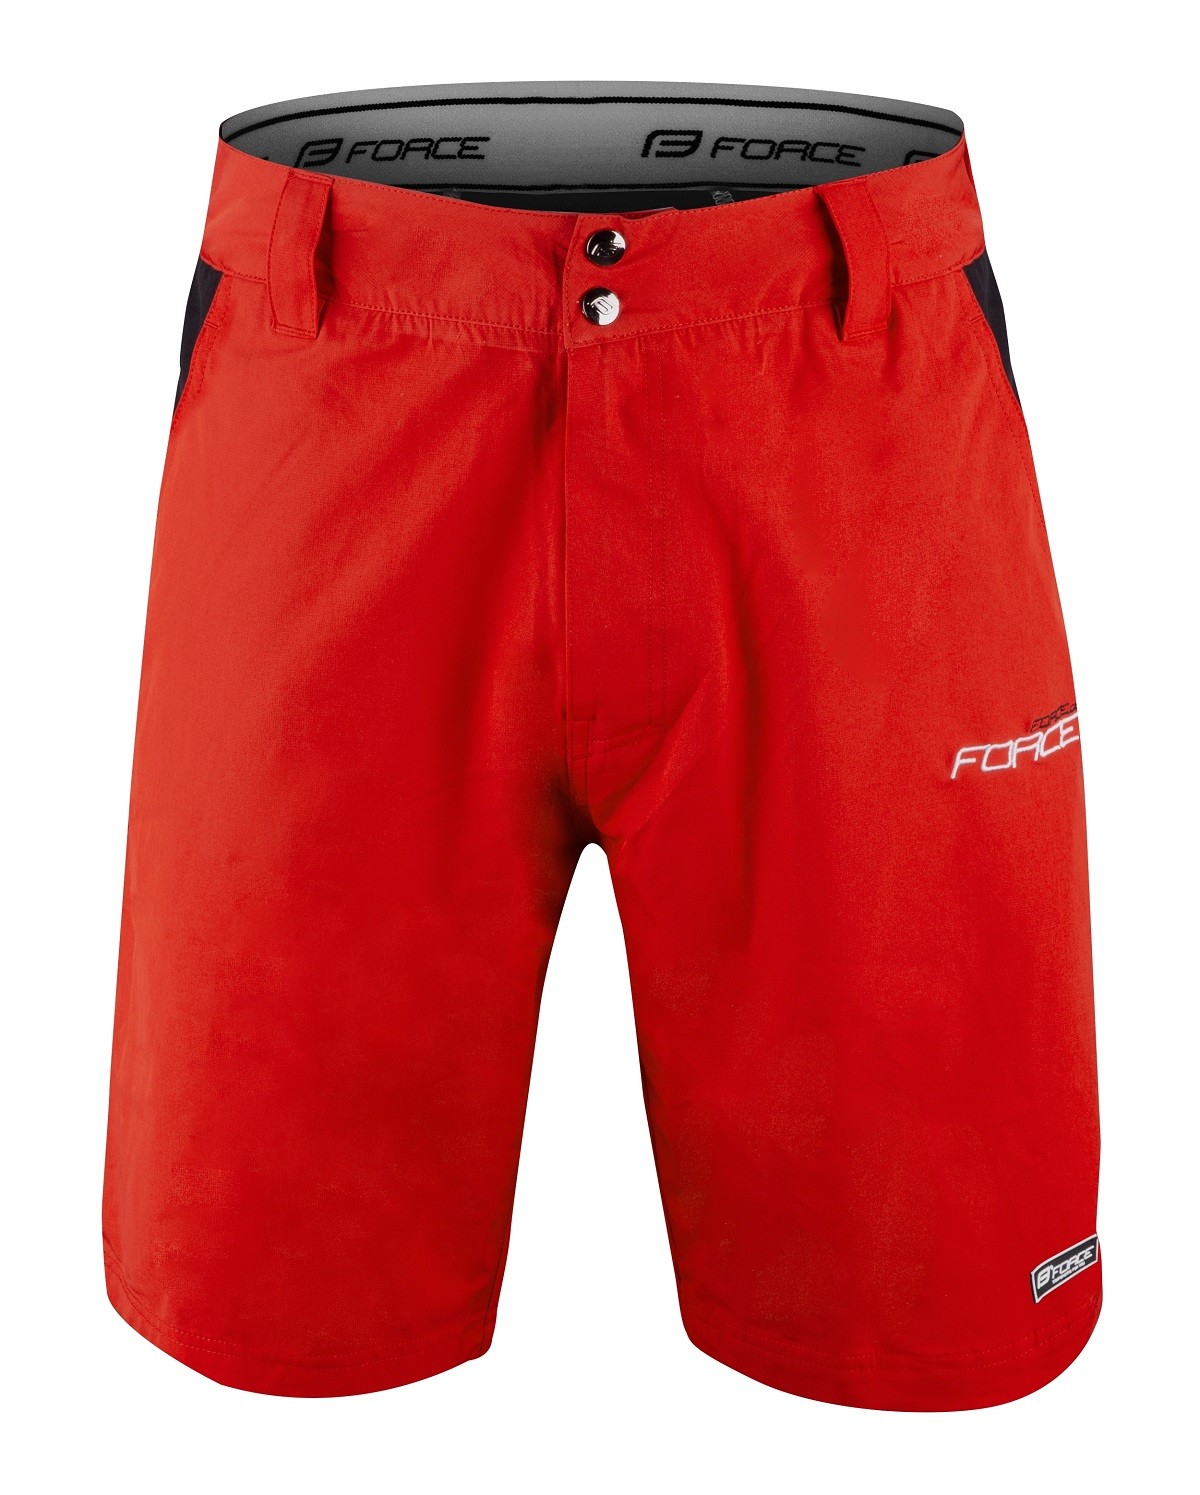 Pantaloni Force Blade MTB cu sub-pantaloni cu bazon, Rosu, XS